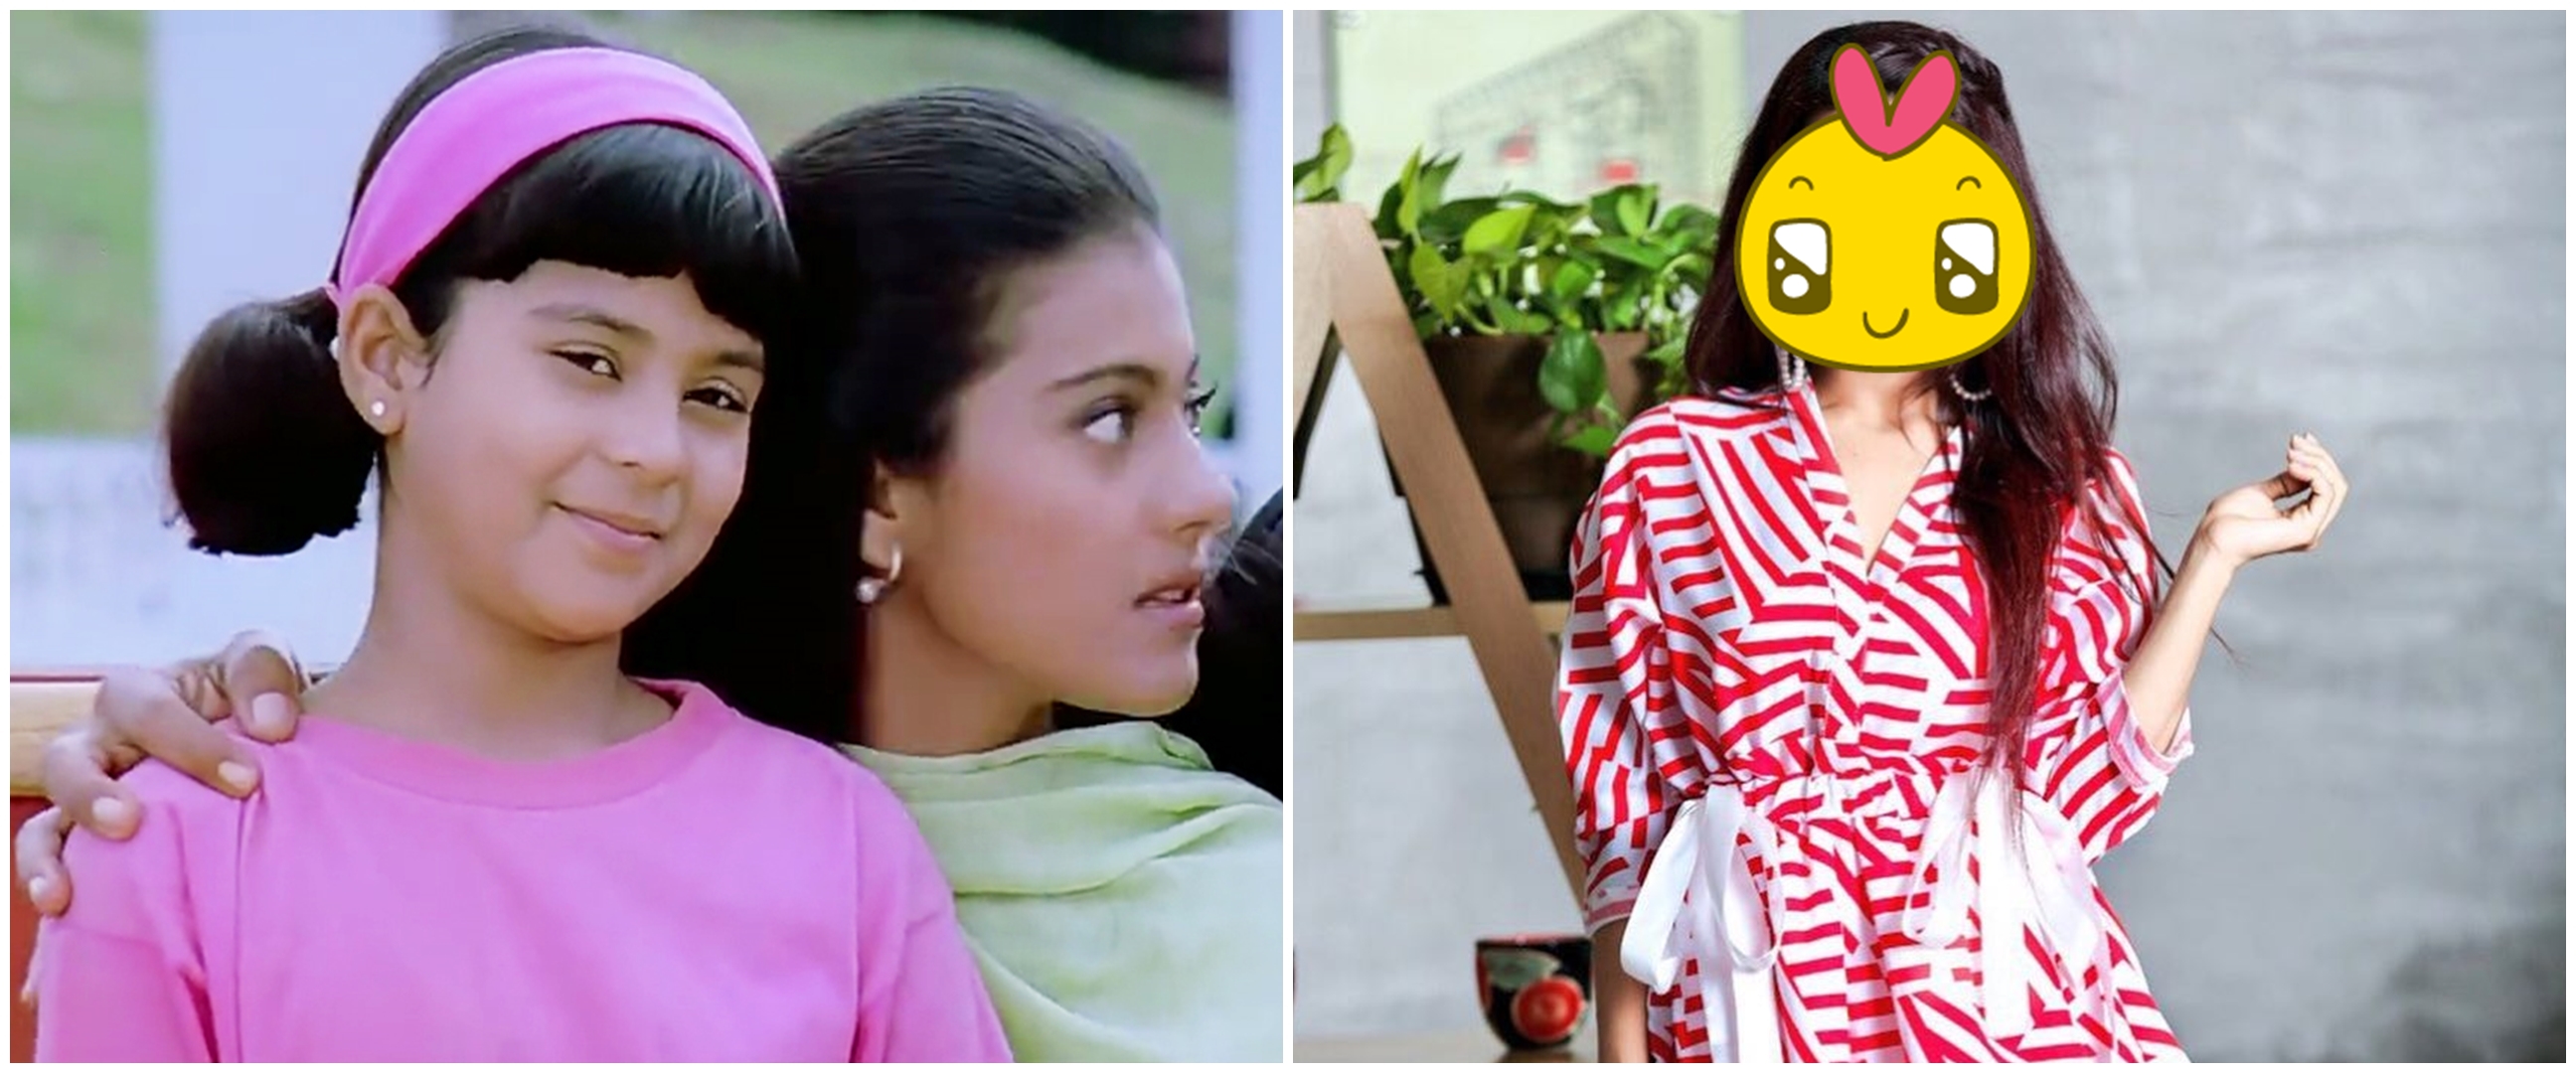 Ingat Anjali di Kuch Kuch Hota Hai? Ini 8 potret terbarunya